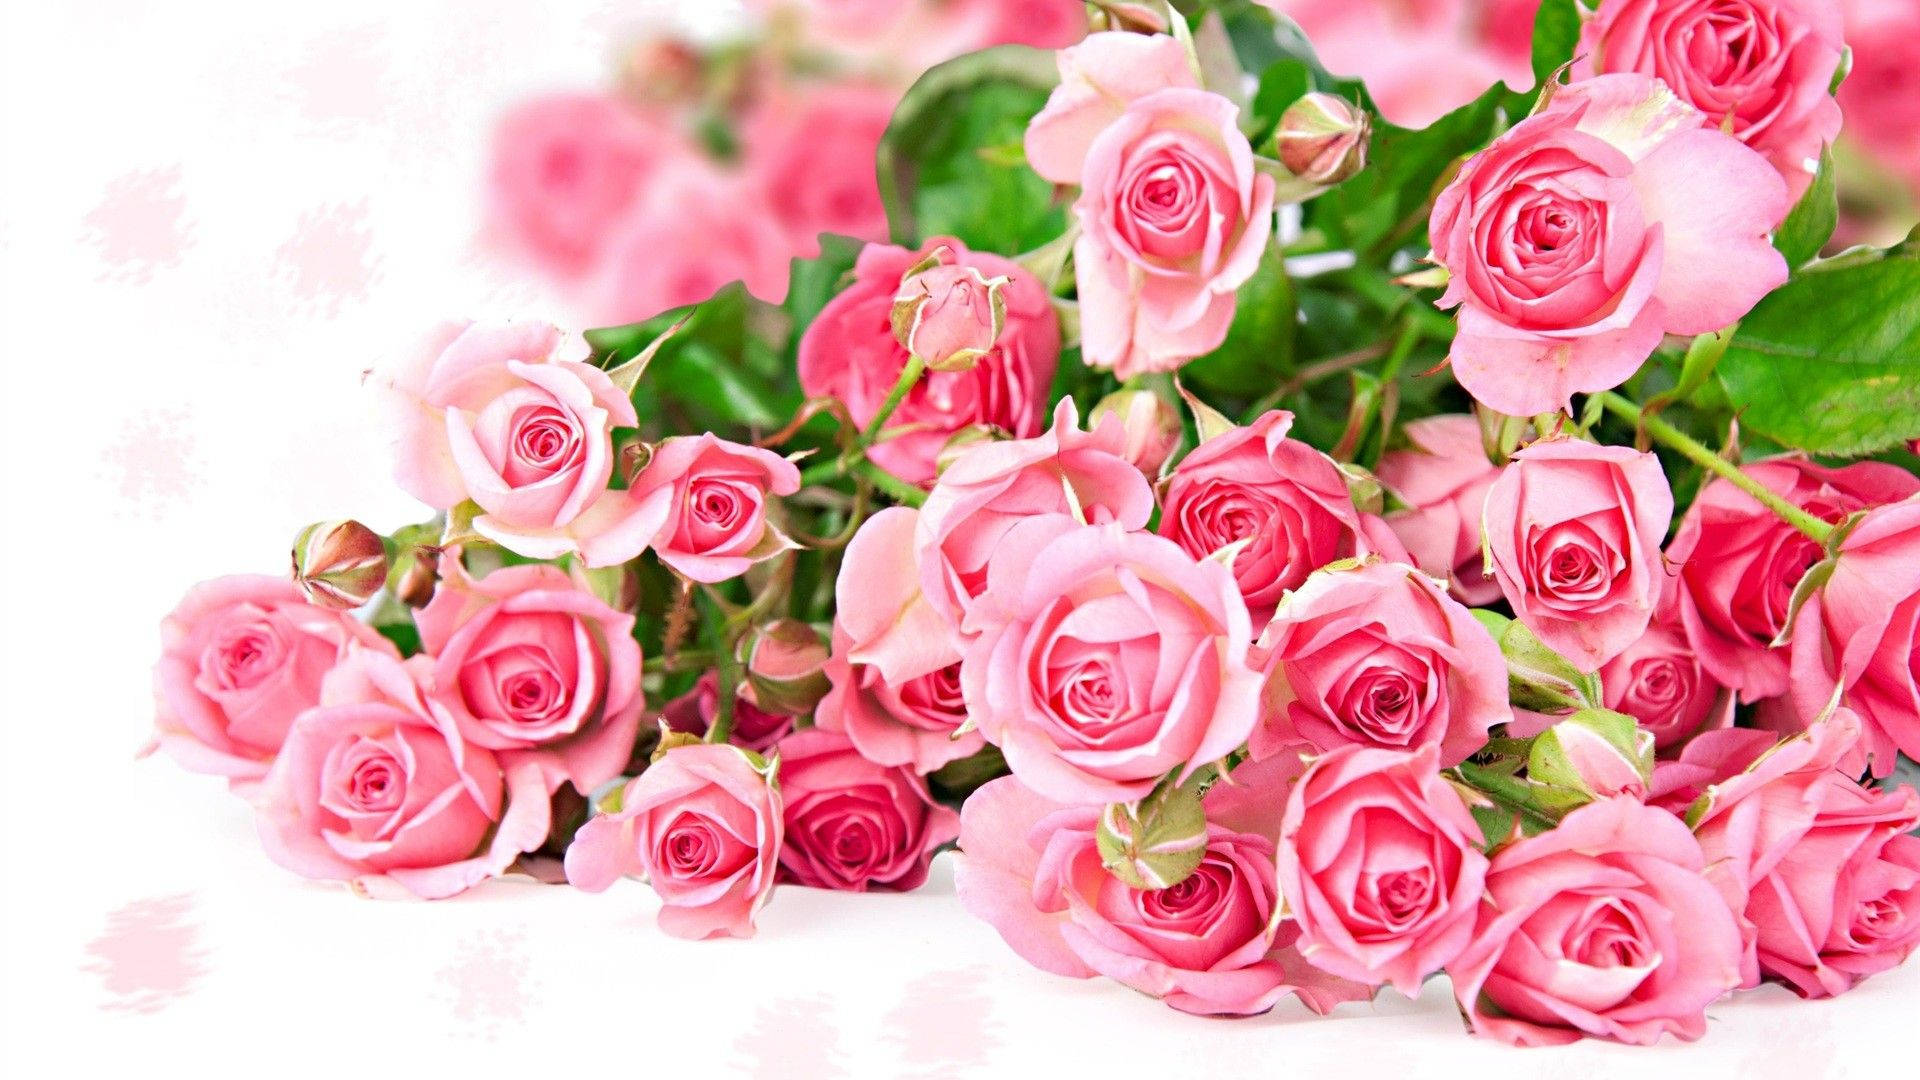 Cute Pink Flower Buds Of Roses